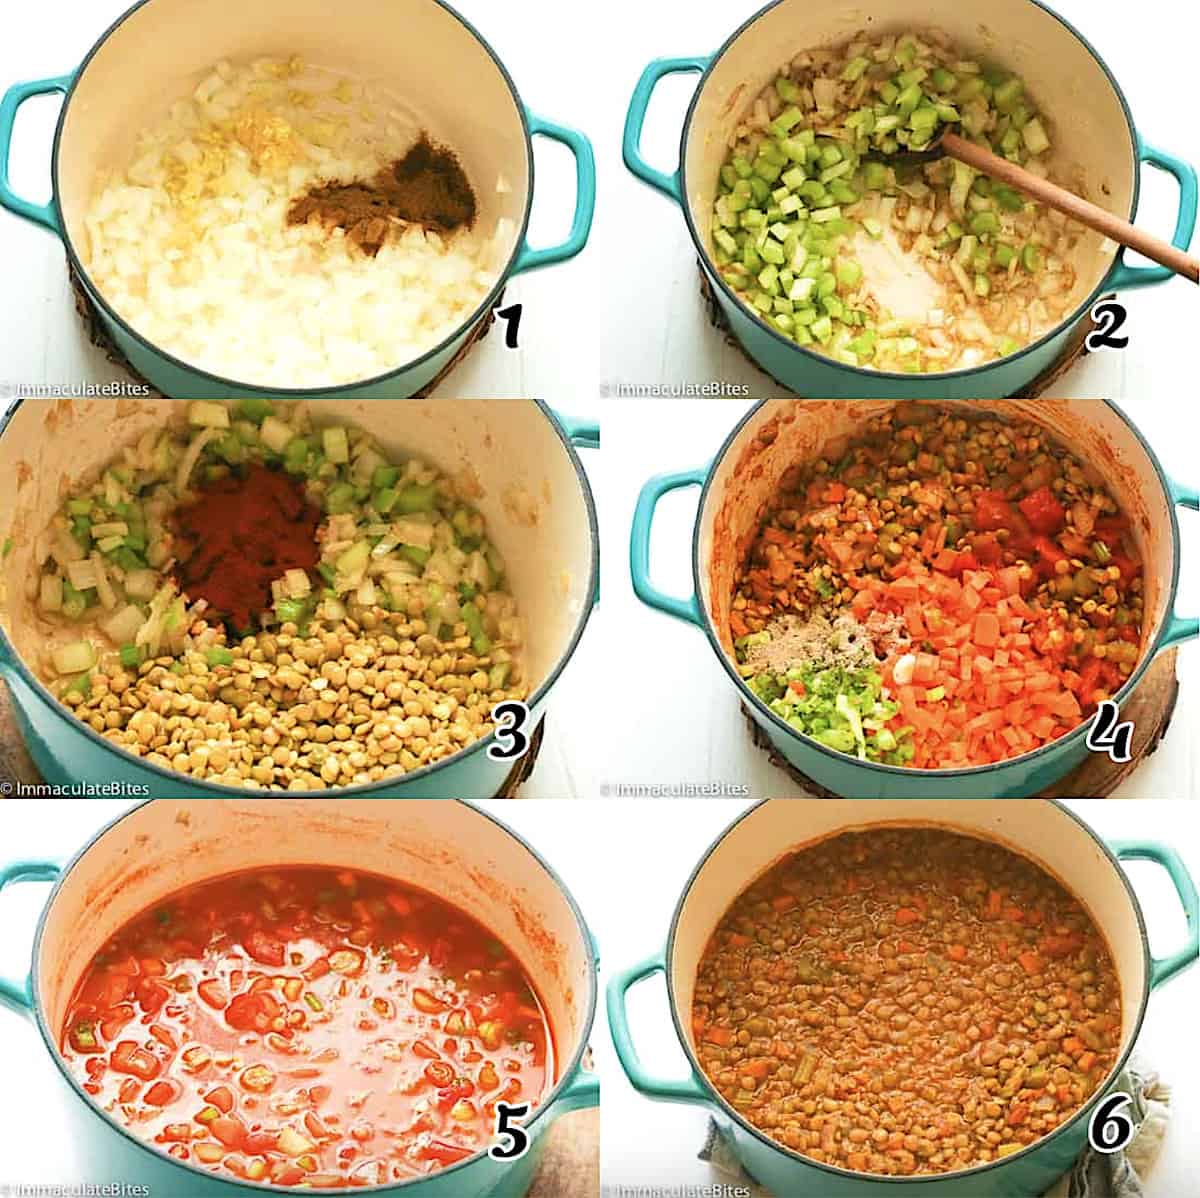 Saute seasonings, add lentils, then add liquid and simmer